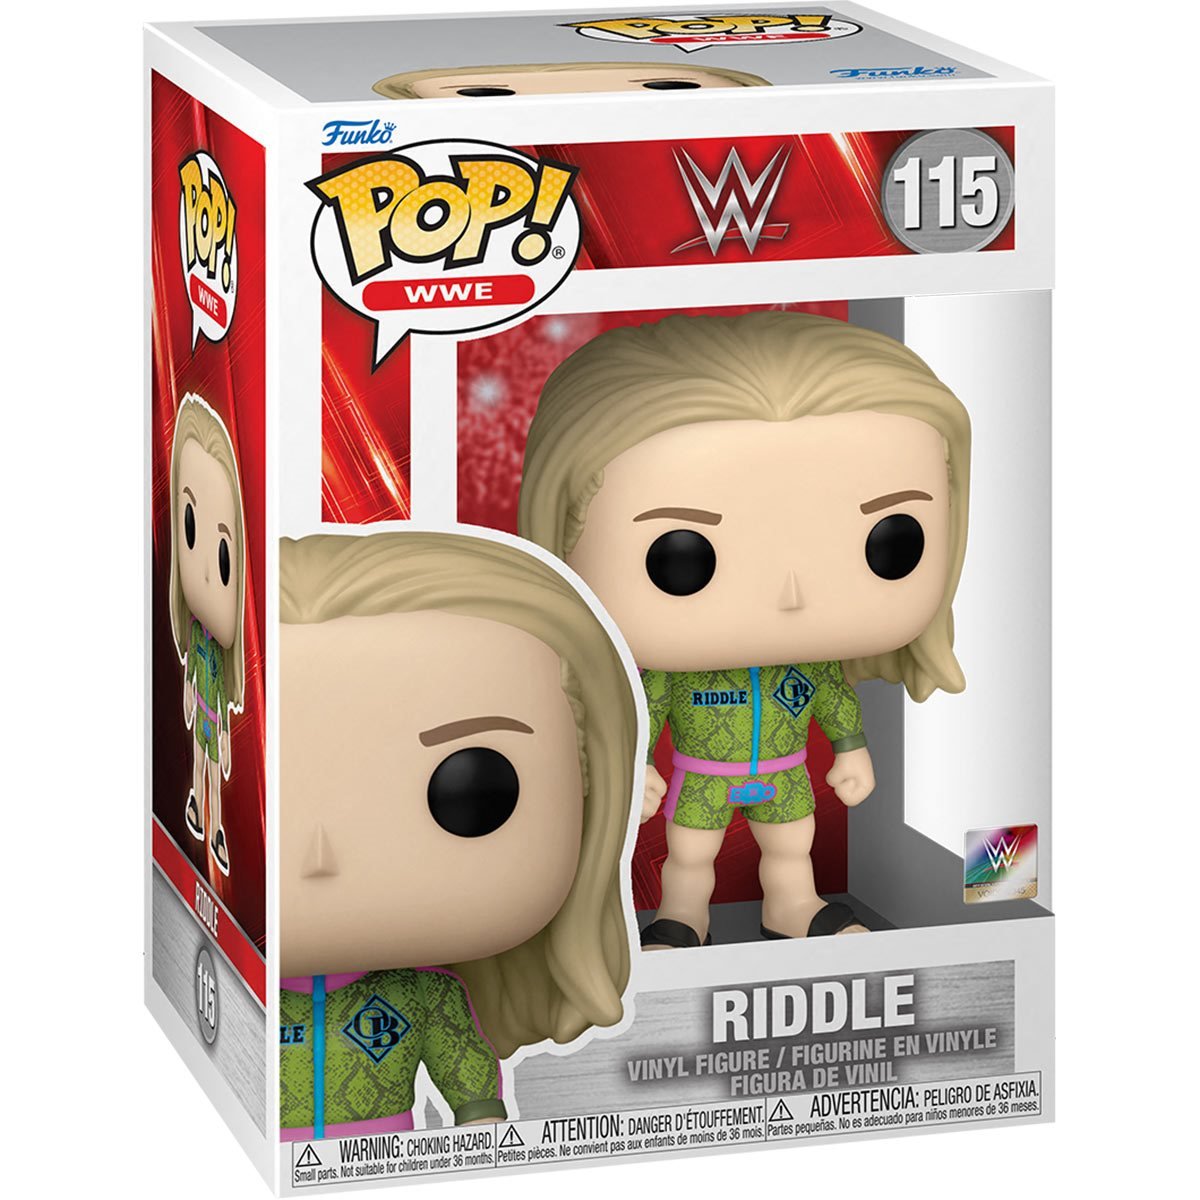 Riddle WWE Pop!